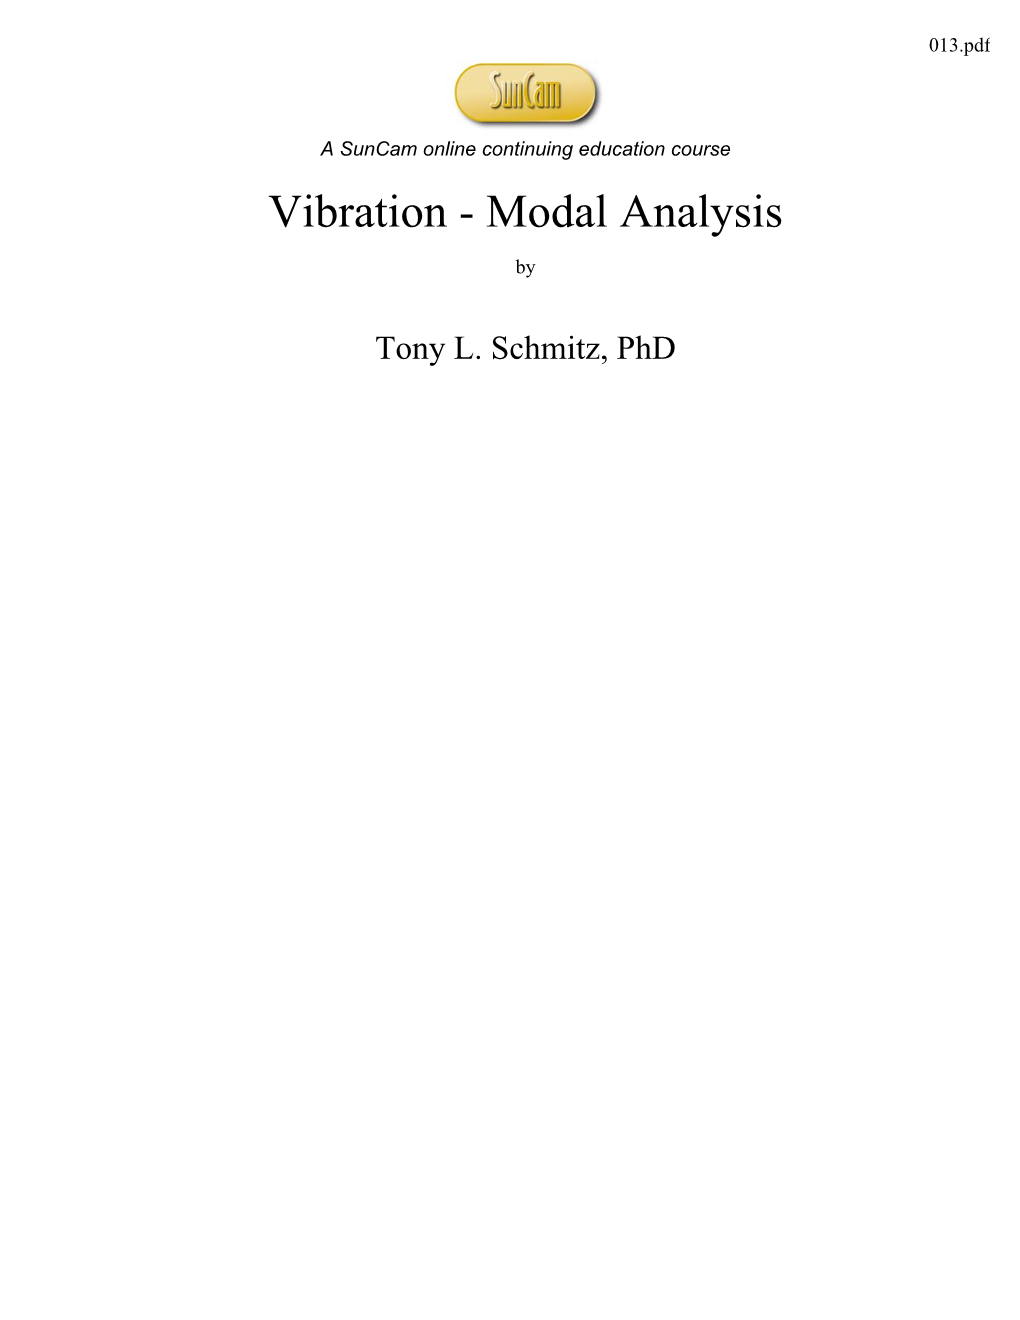 Vibration - Modal Analysis